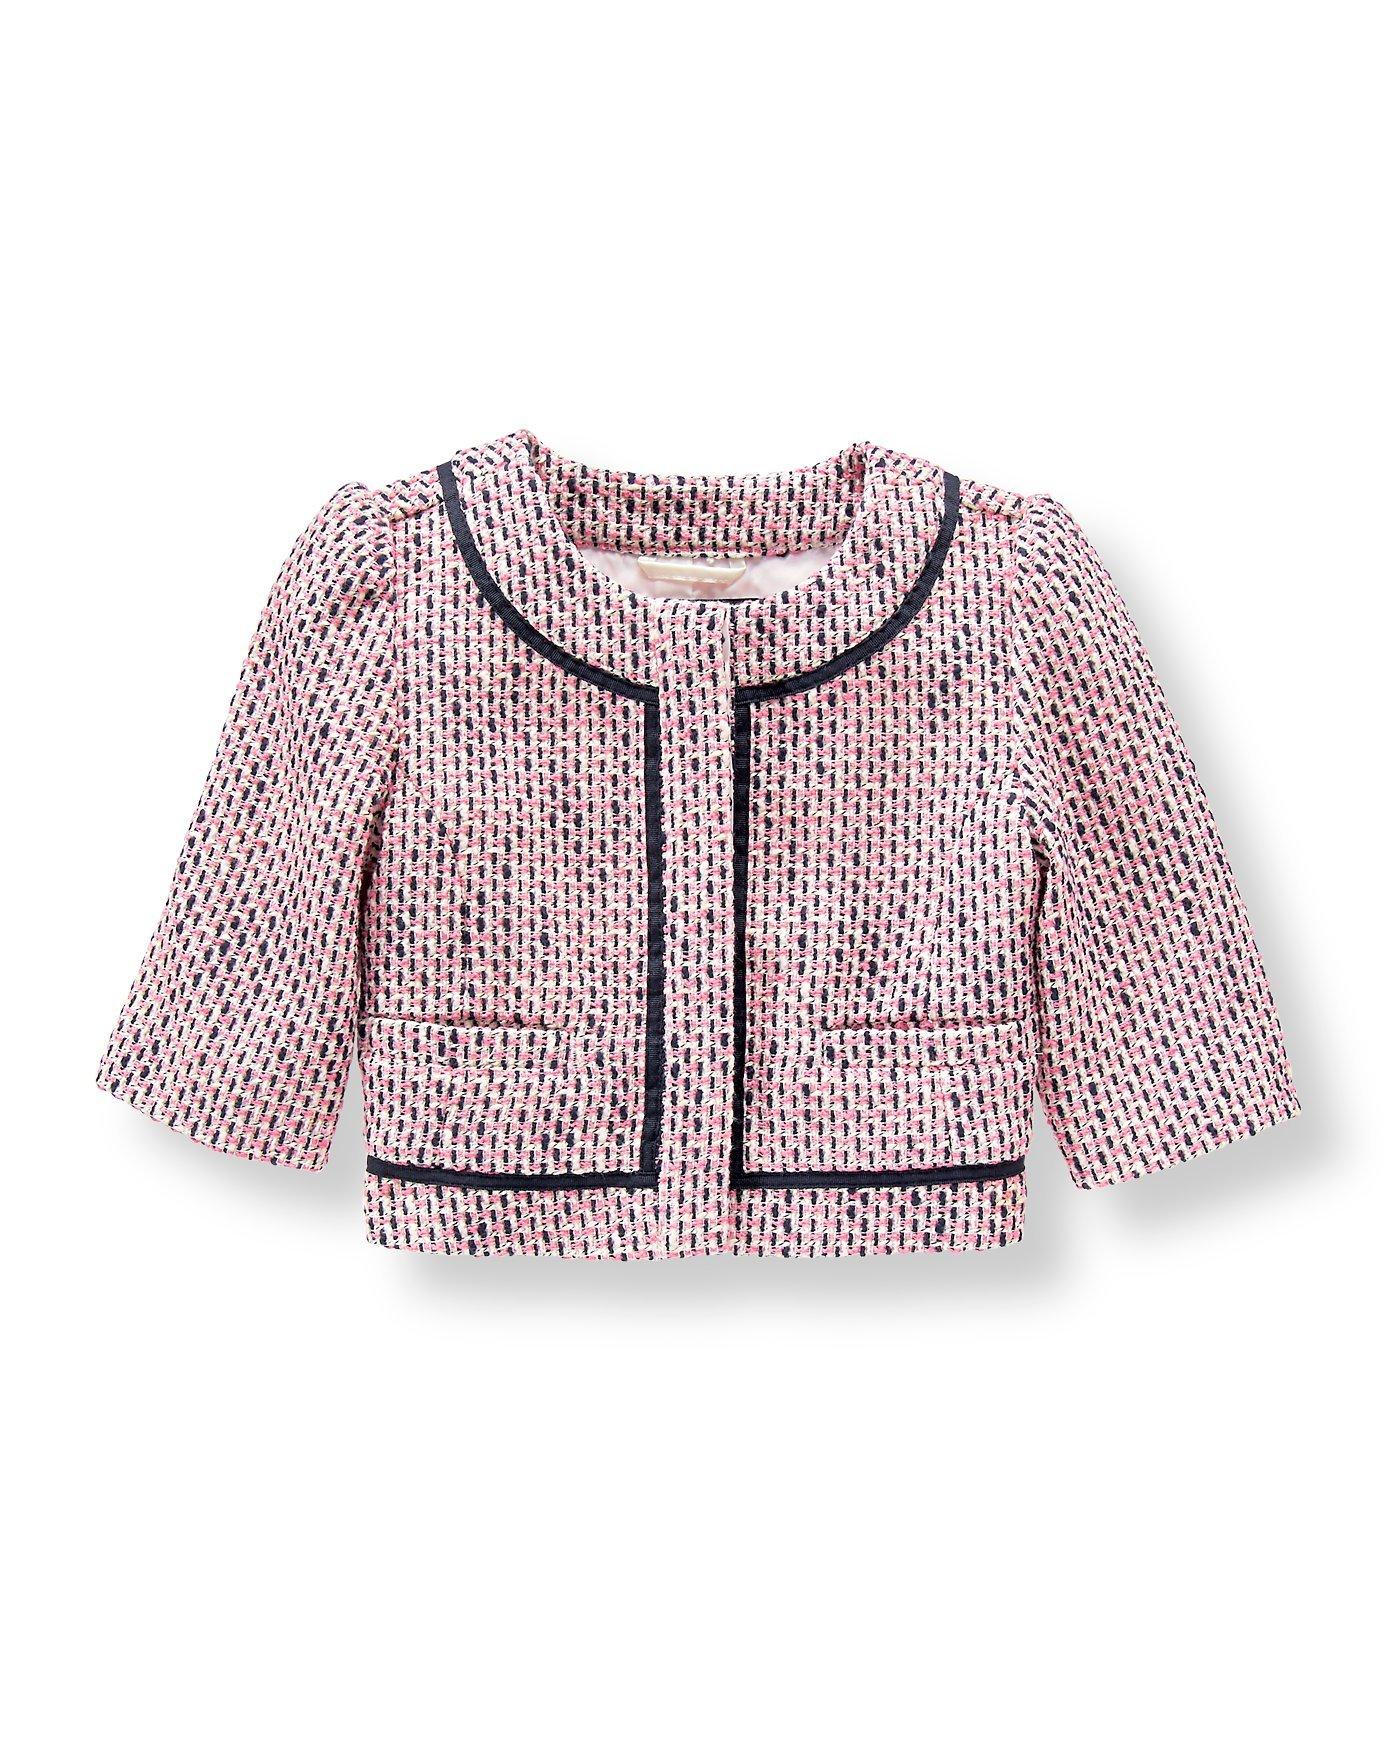 Girl Hydrangea Pink Tweed Jacket by Janie and Jack